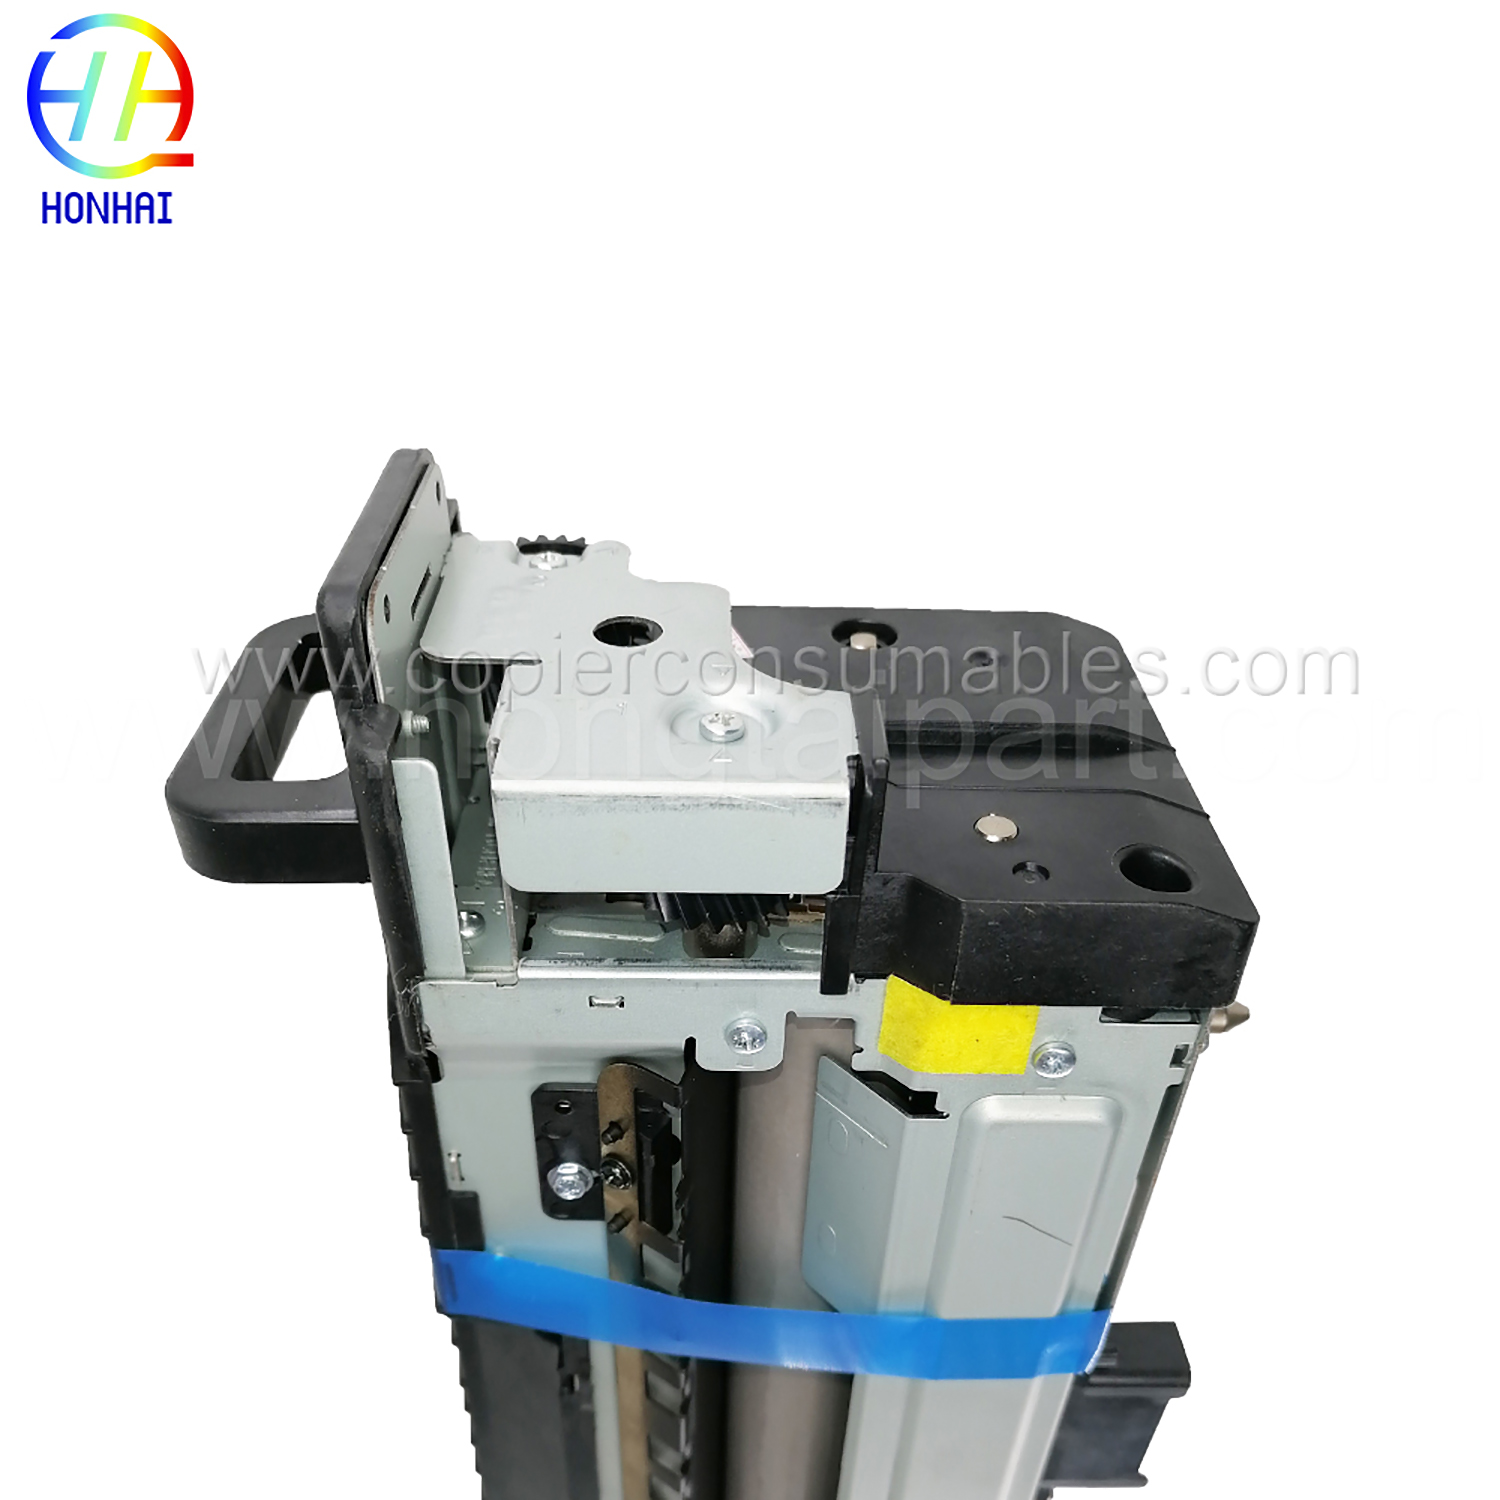 Unidade fusora 220V para Samsung SL-K7400, S-K7500, SL-K7600 JC91-01194A (4)